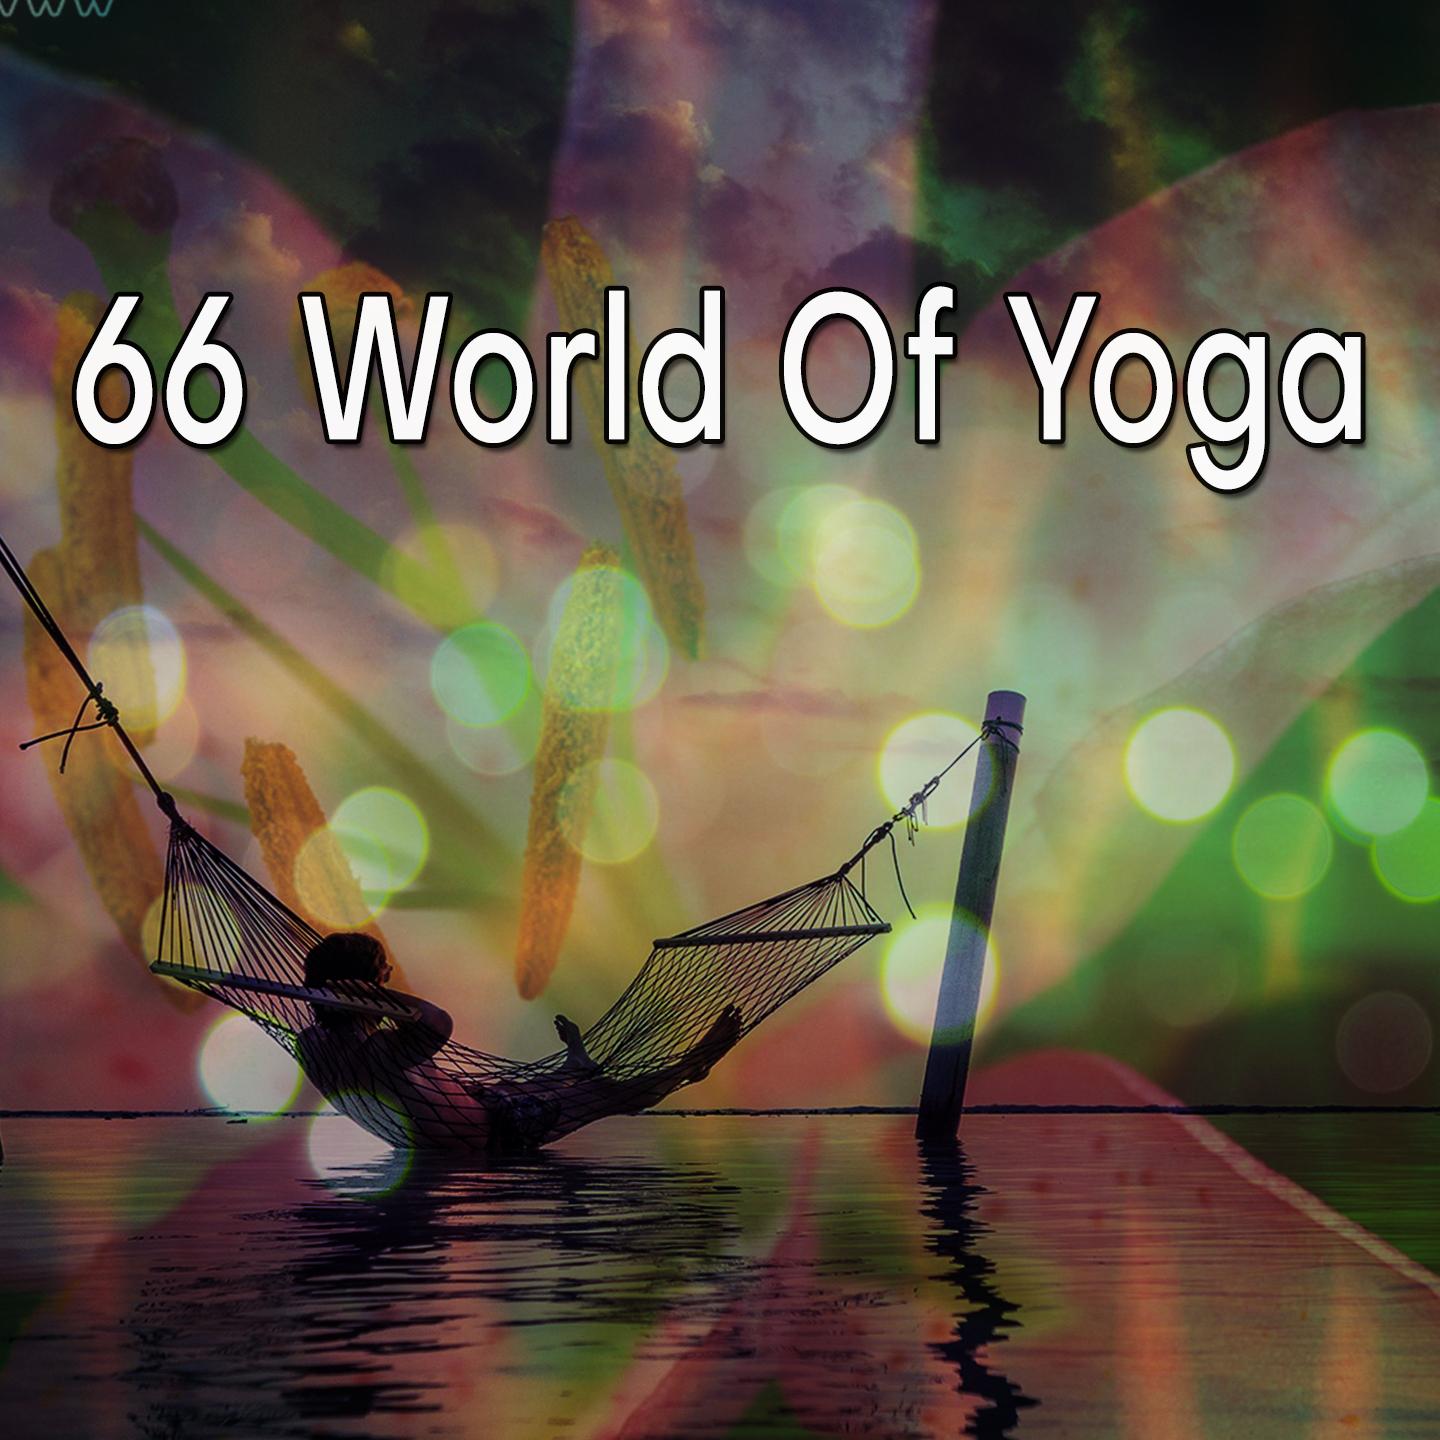 66 World of Yoga